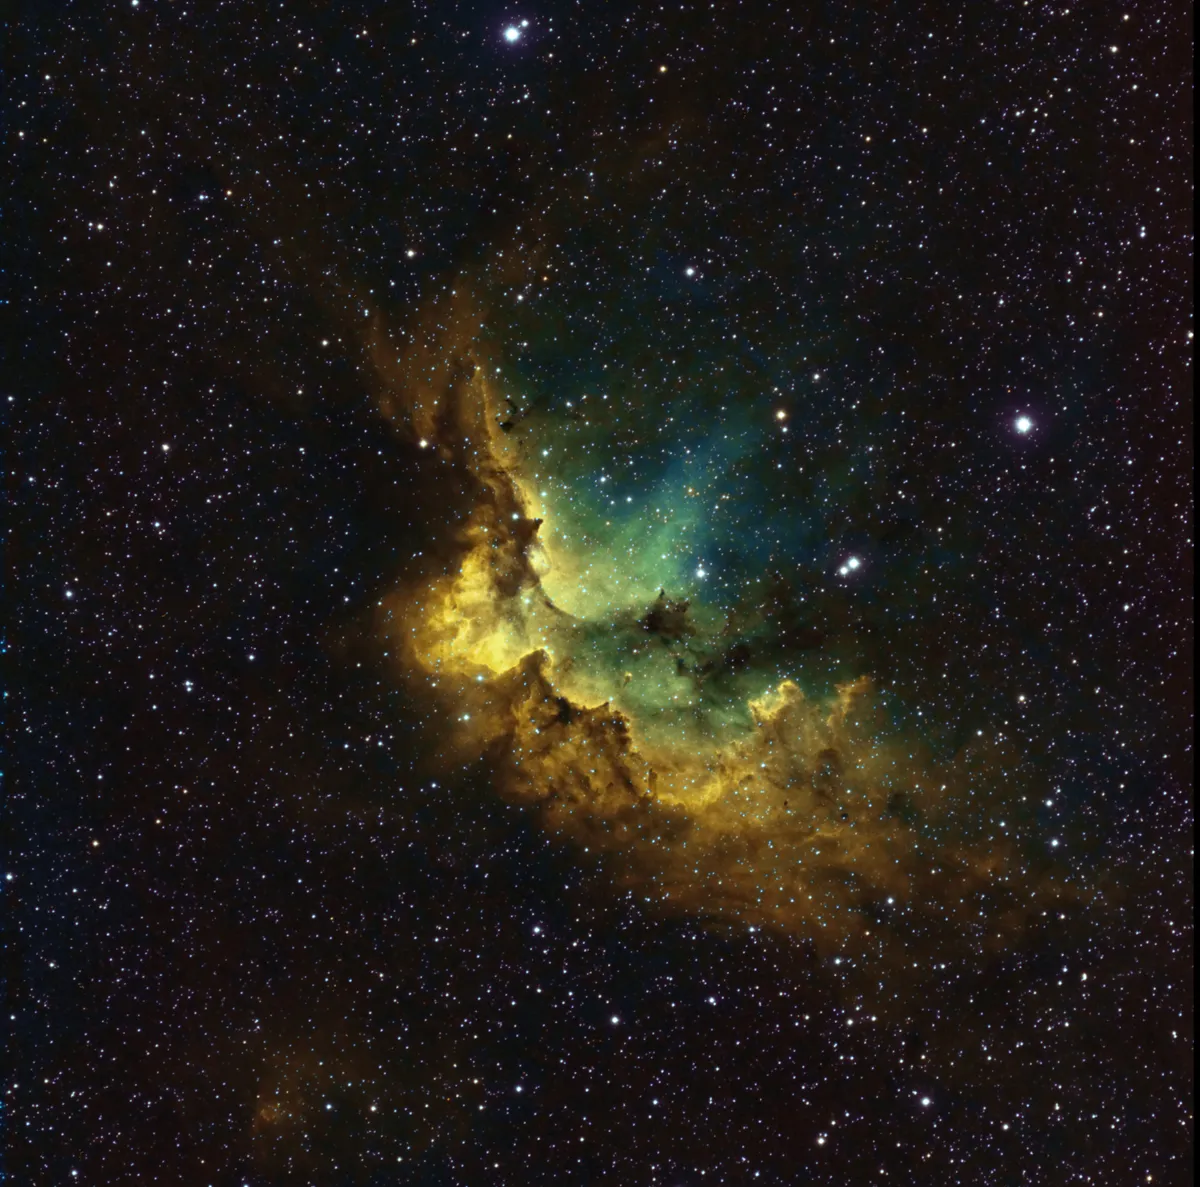 NGC 7380 Wizard Nebula by Chris Heapy, Macclesfield, UK. Equipment: TeleVue NP127is, Losmandy G11, Gemini L.4, Atik490EX, TV Pronto, Lodestar